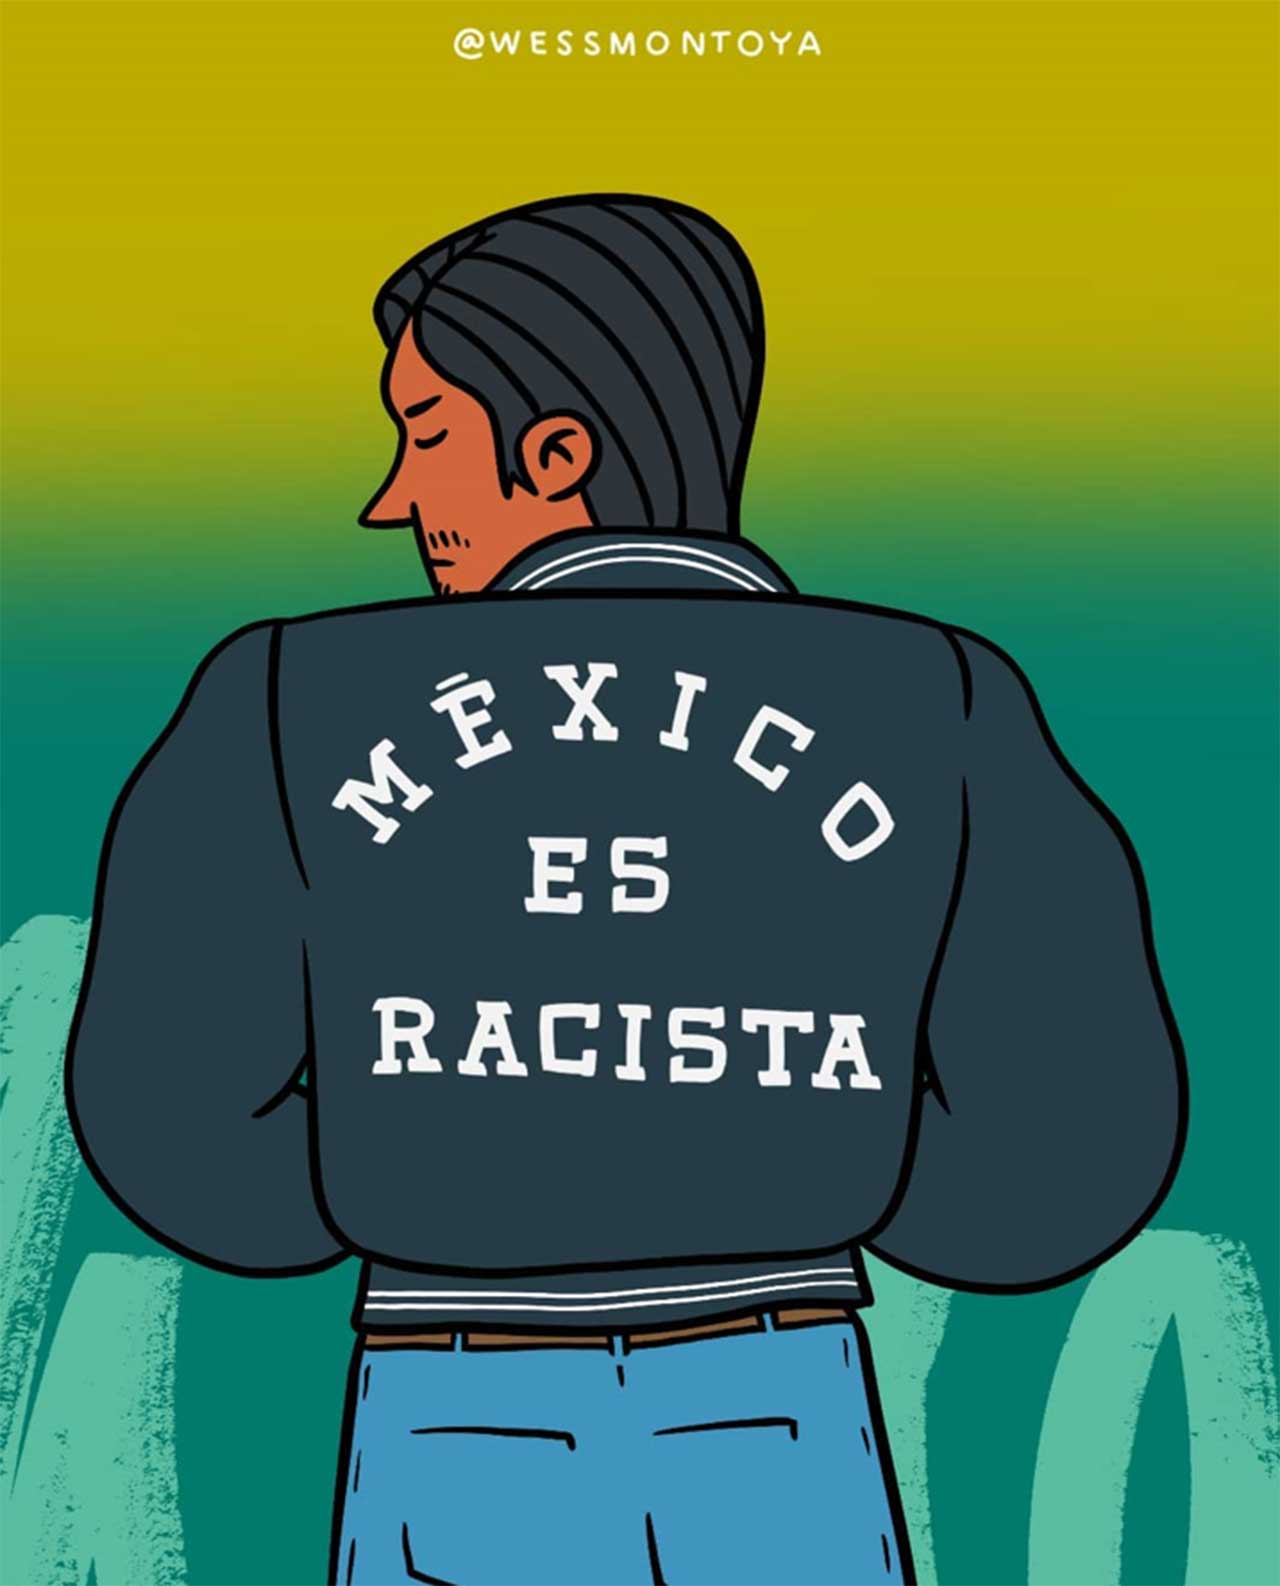 Tenoch Huerta publica imagen sobre racismo Mexico